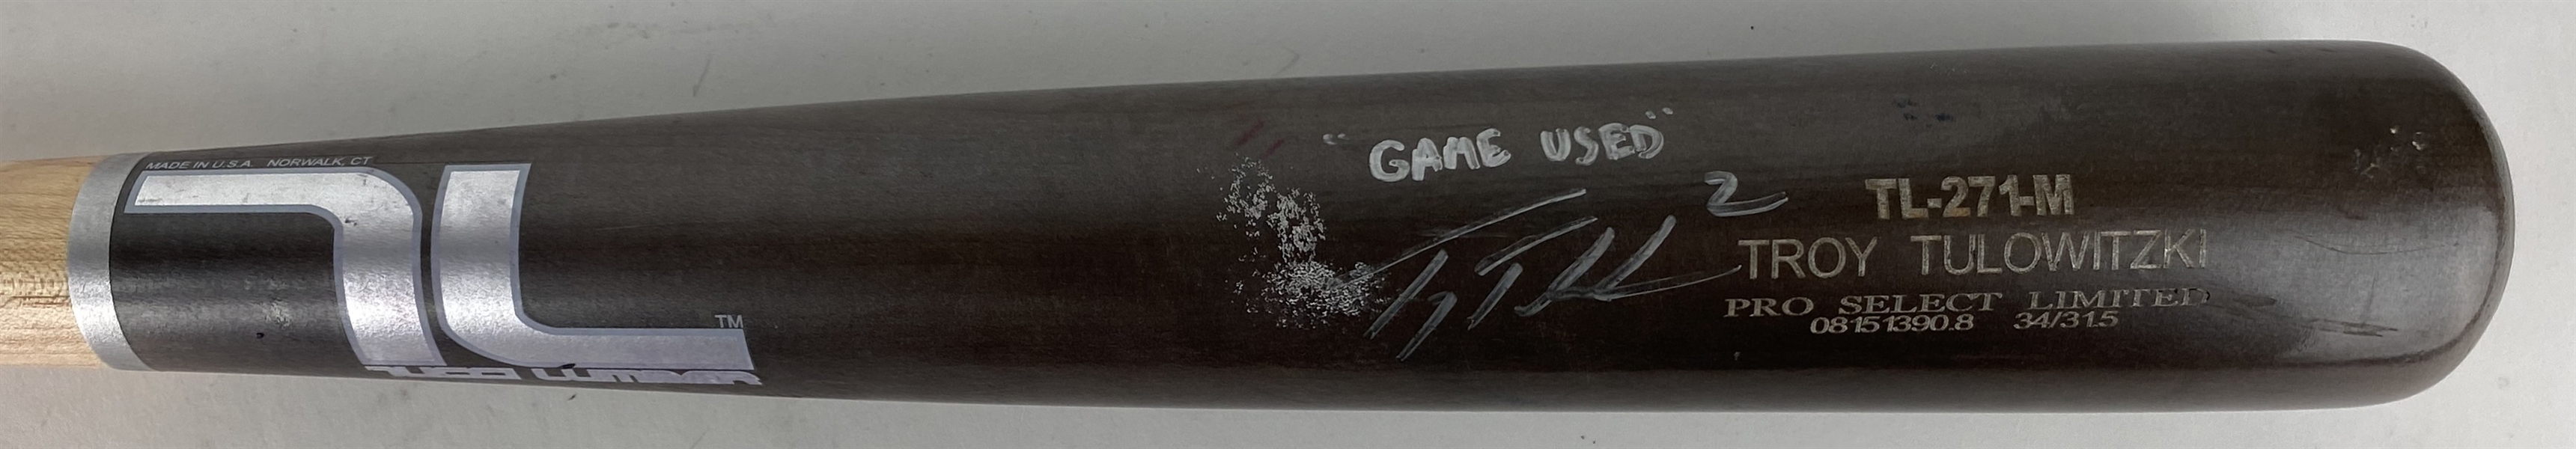 Troy Tulowitzki Signed & Game Used 2013 Tucci TL-271-M Baseball Bat - PSA/DNA GU 9.5!